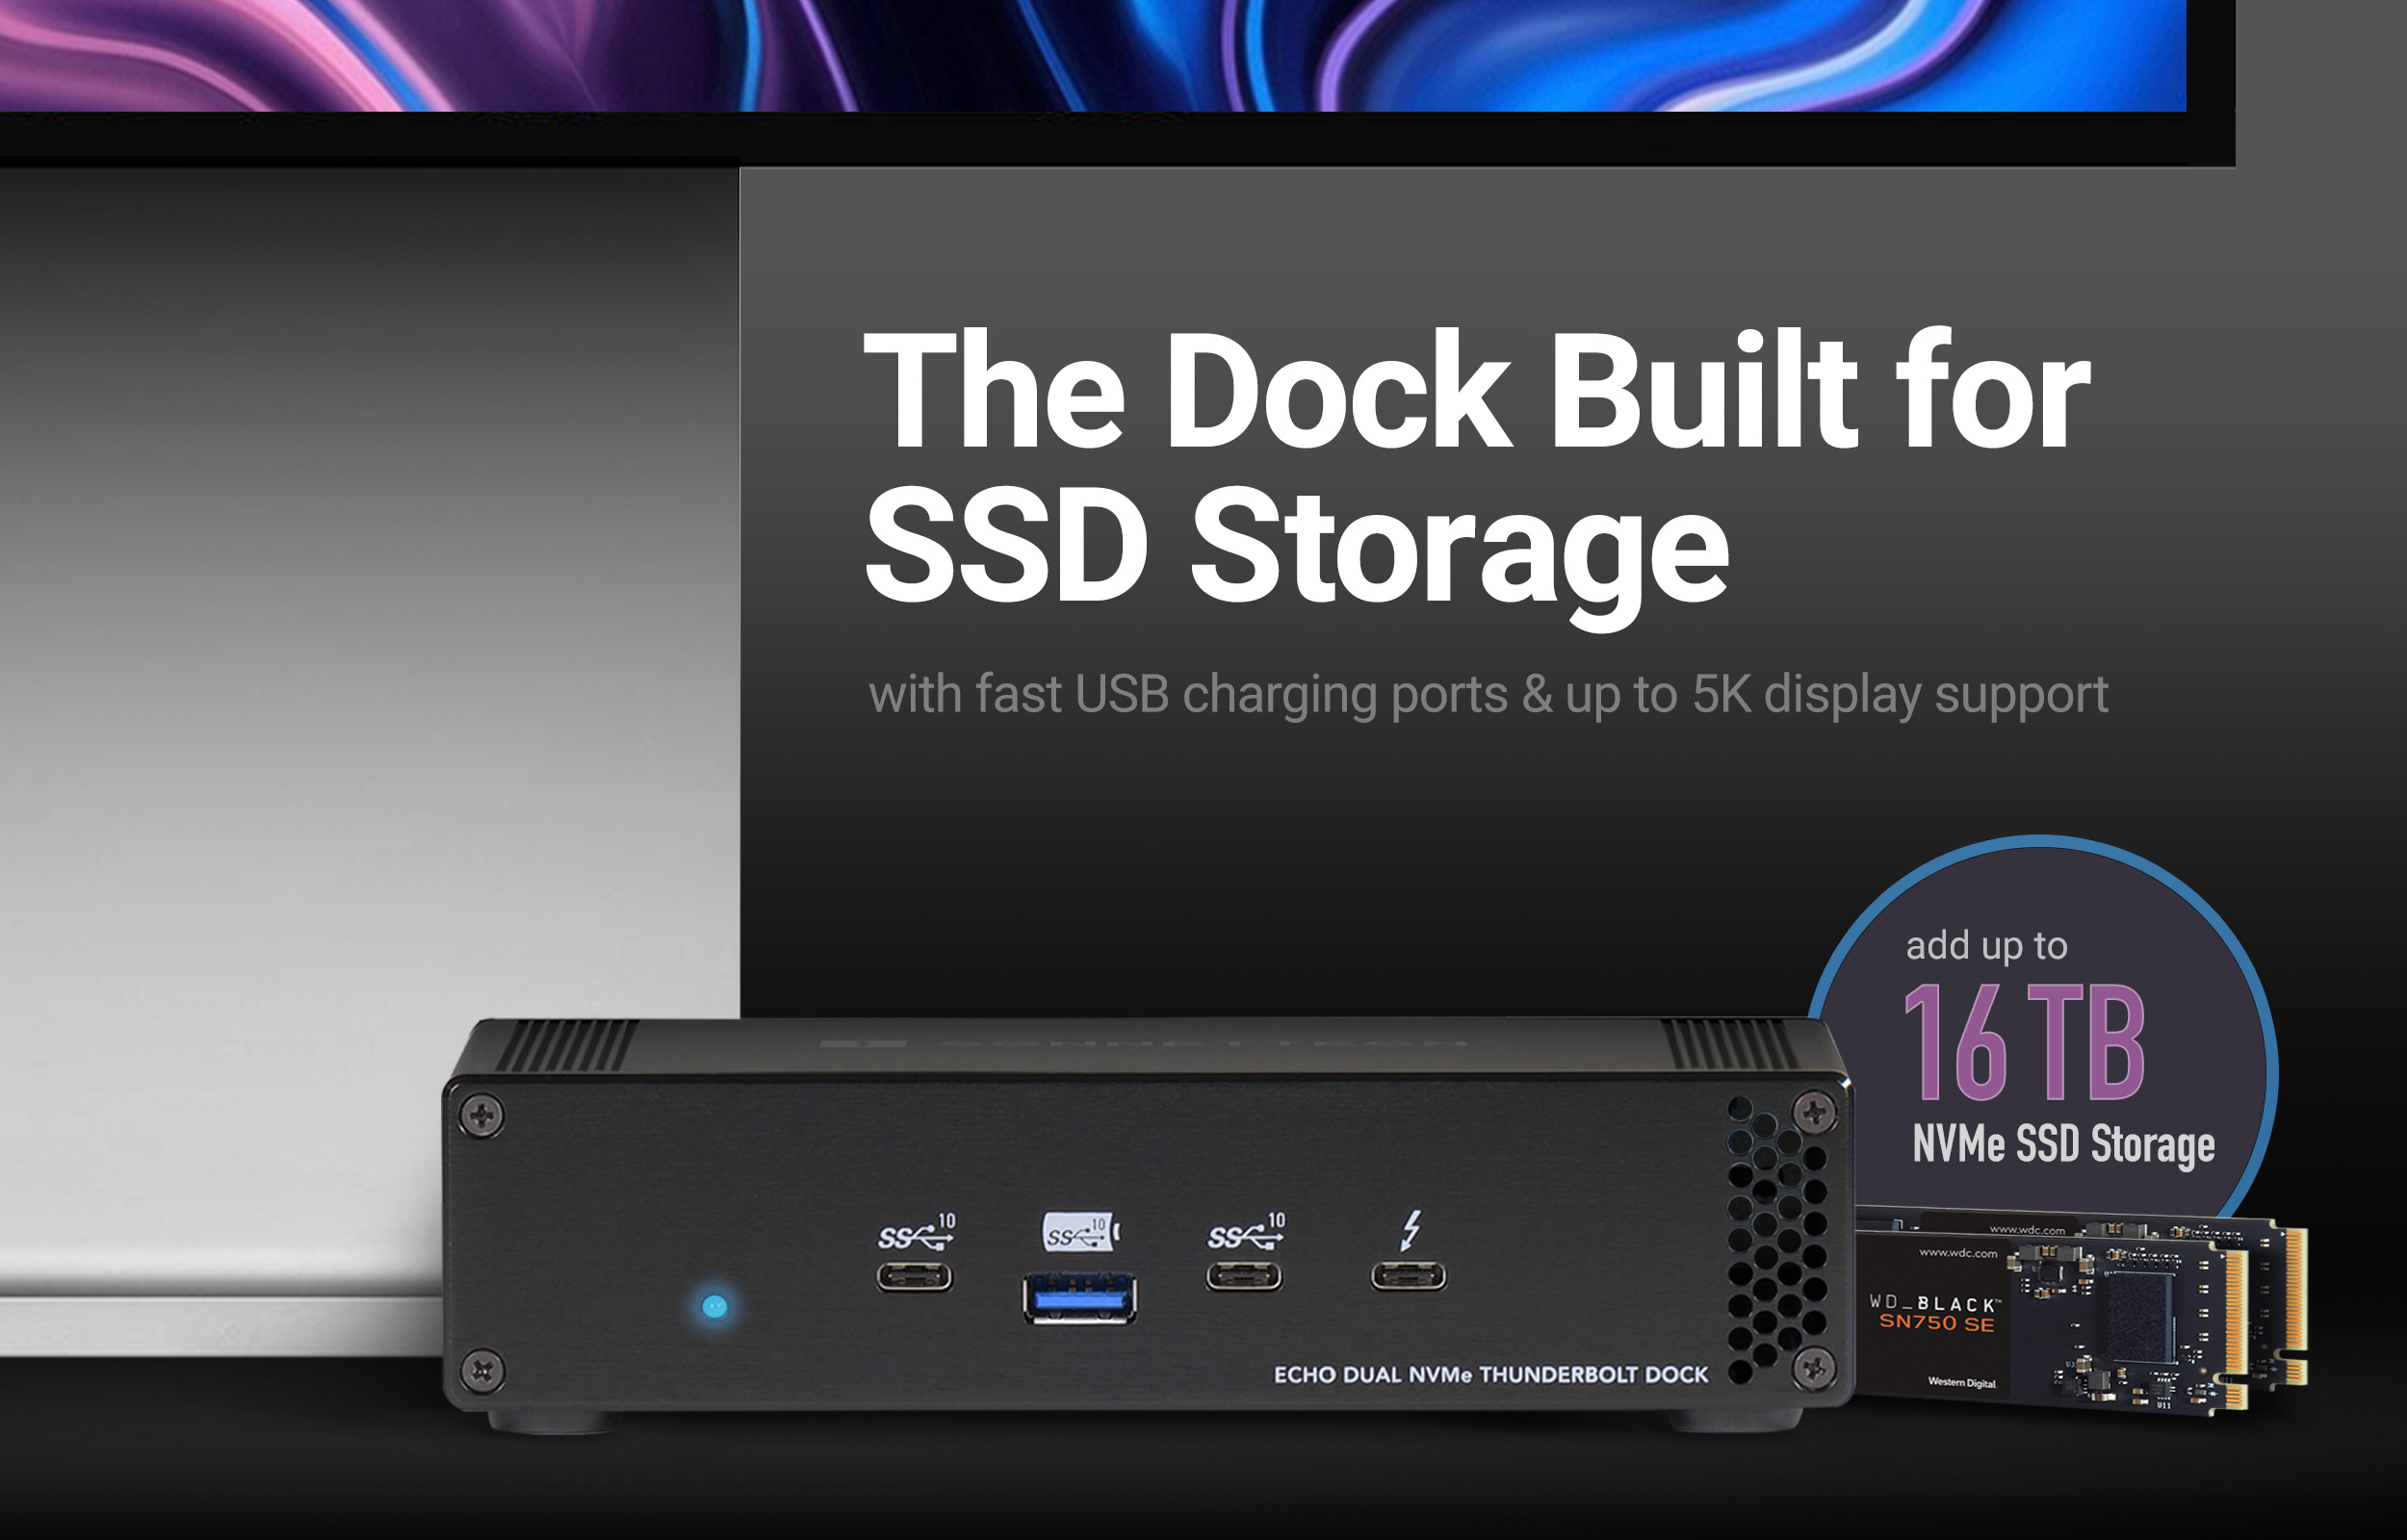 Sonnet Echo Dual NVMe Thunderbolt Dock - The Dock Built for SSD Storage